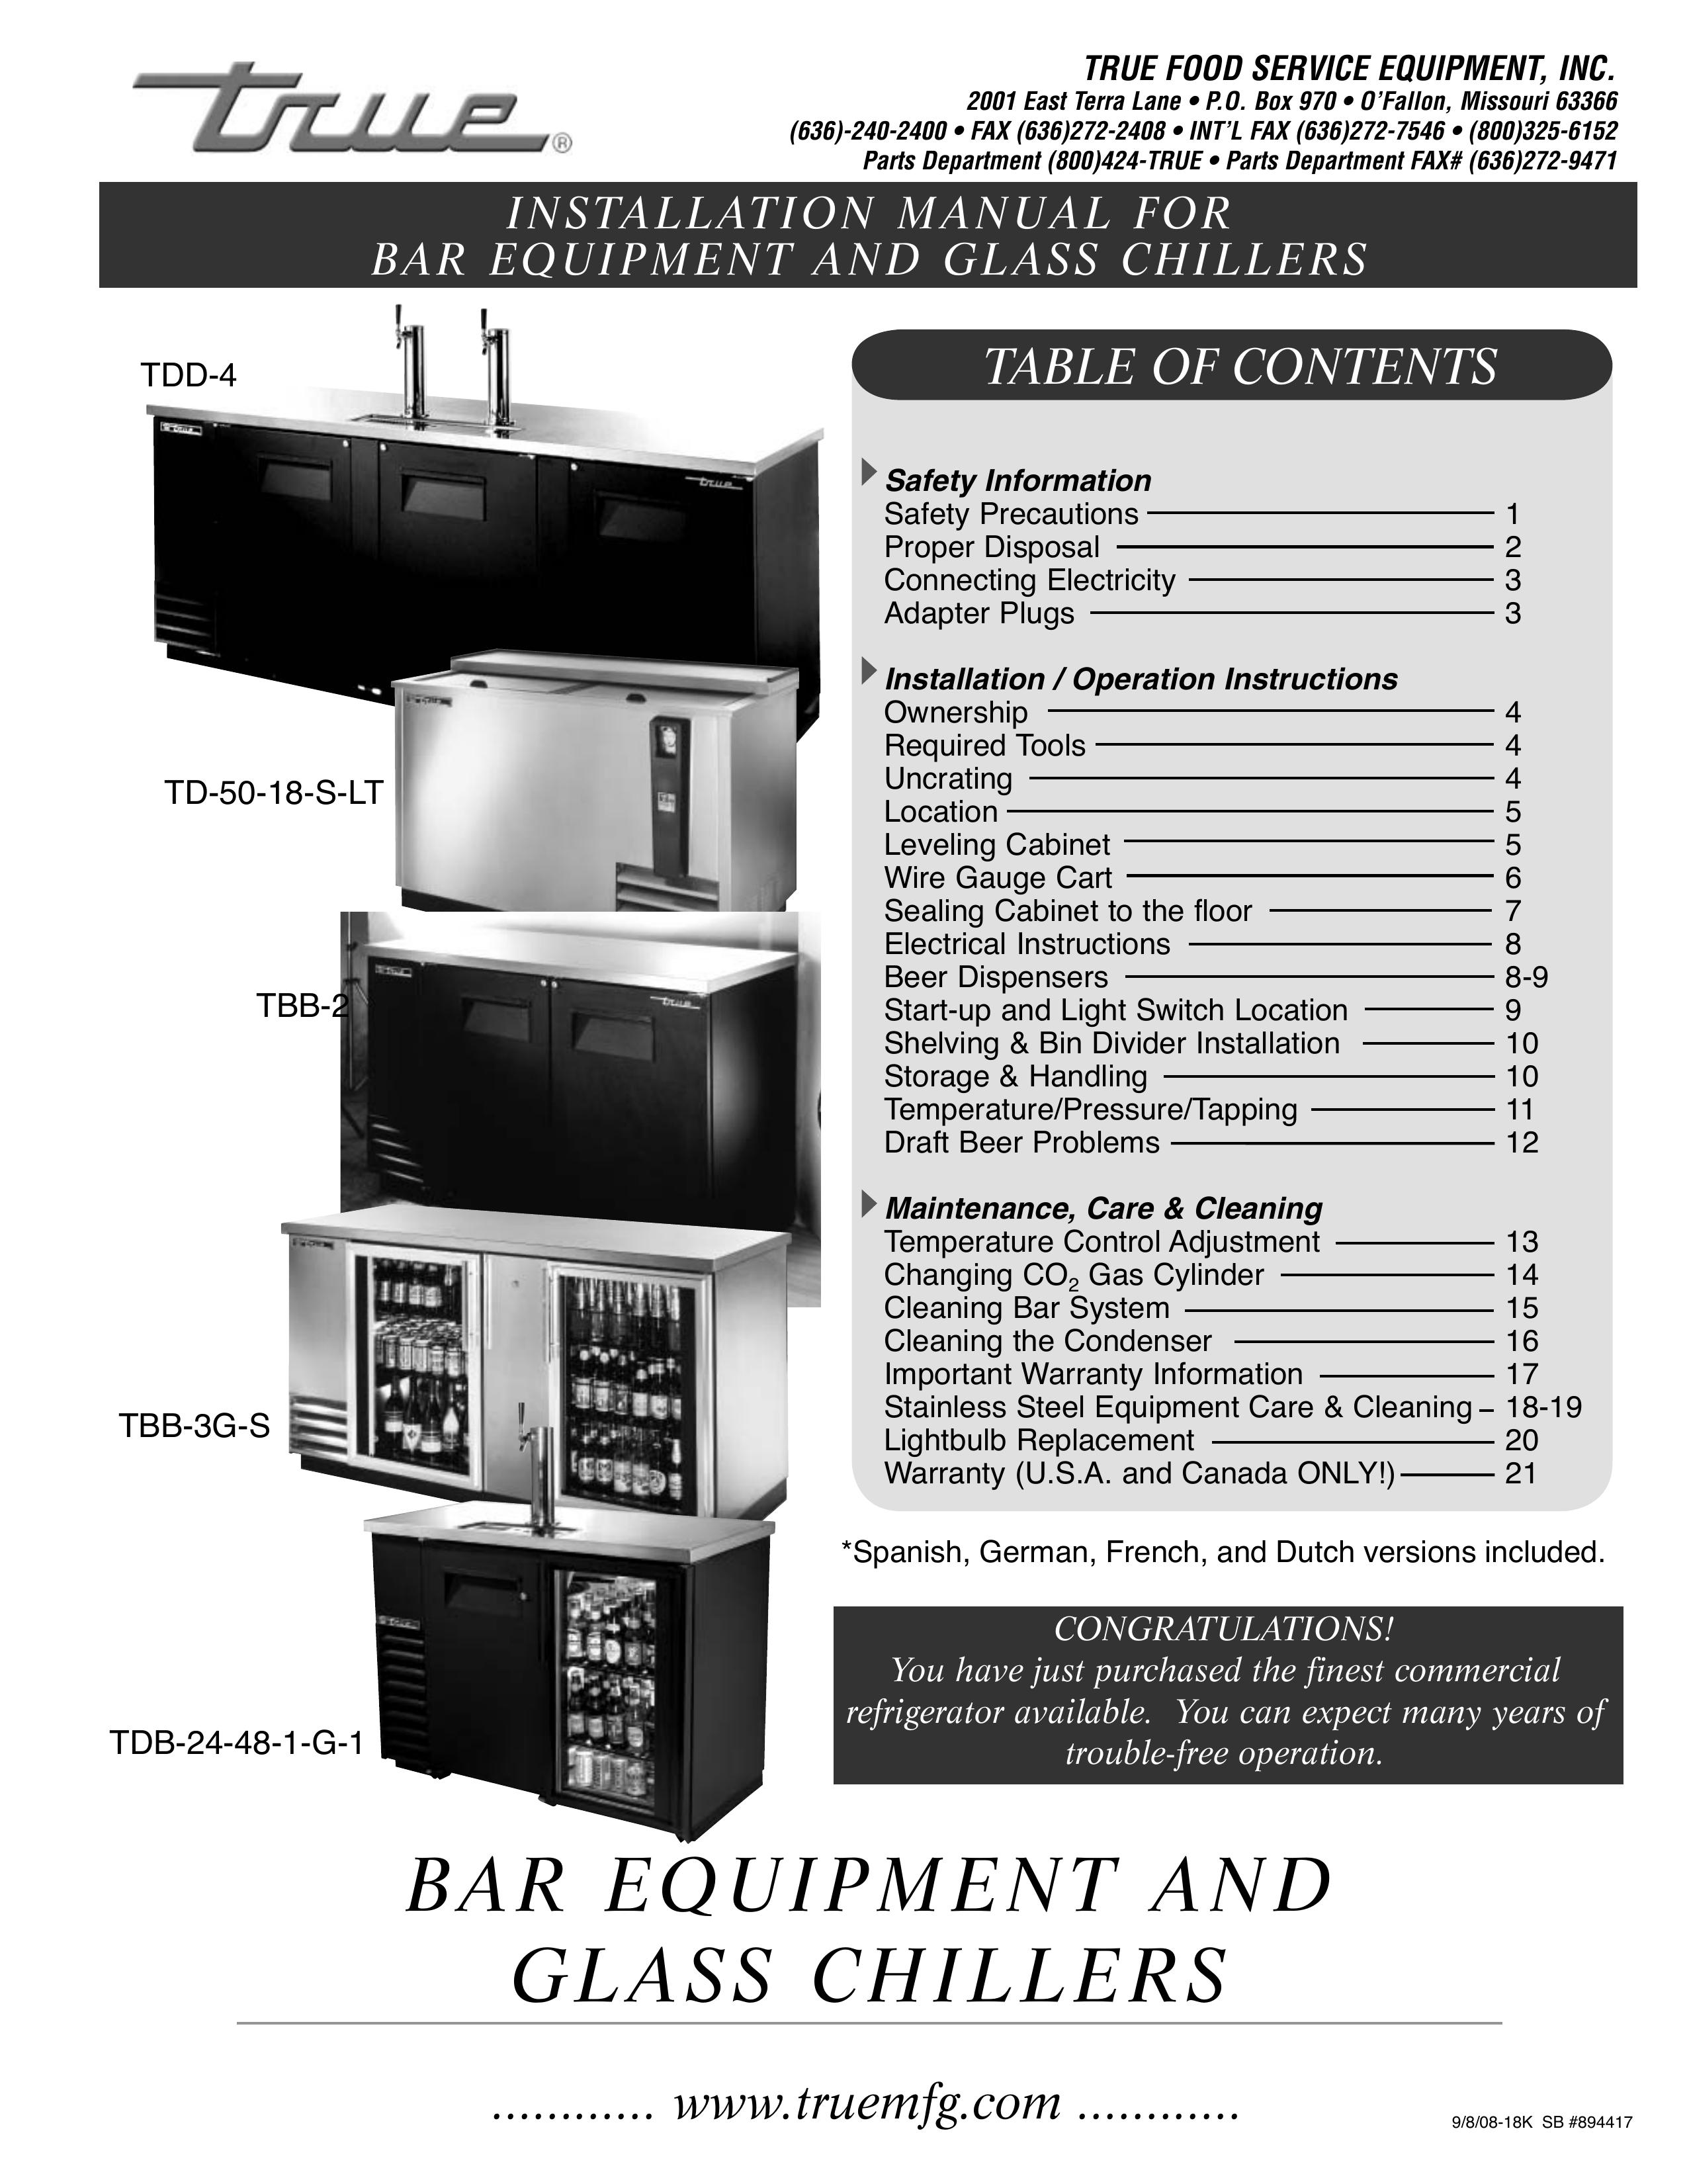 True Manufacturing Company TDB-24-48-1-G-1 Refrigerator User Manual